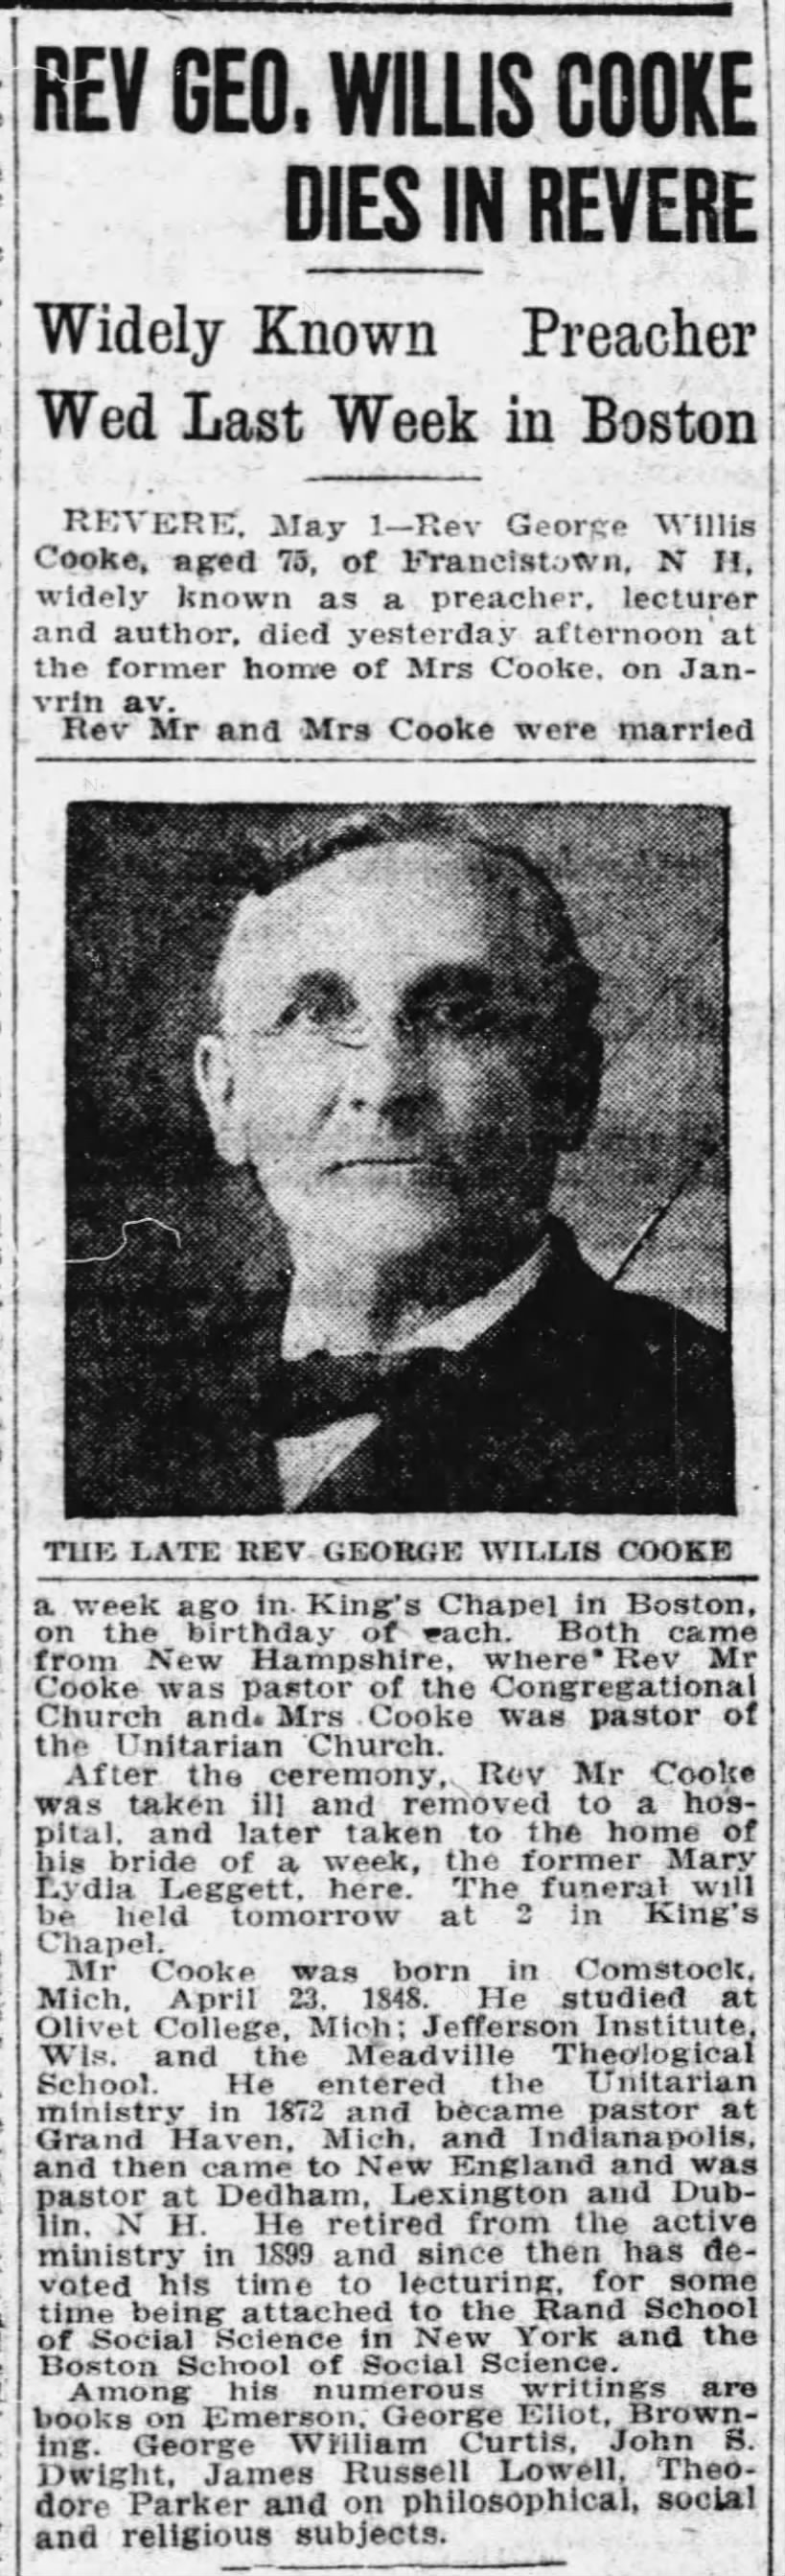 Boston Globe
5/1/1923
Death of Willis Cooke following marriage to Leggett